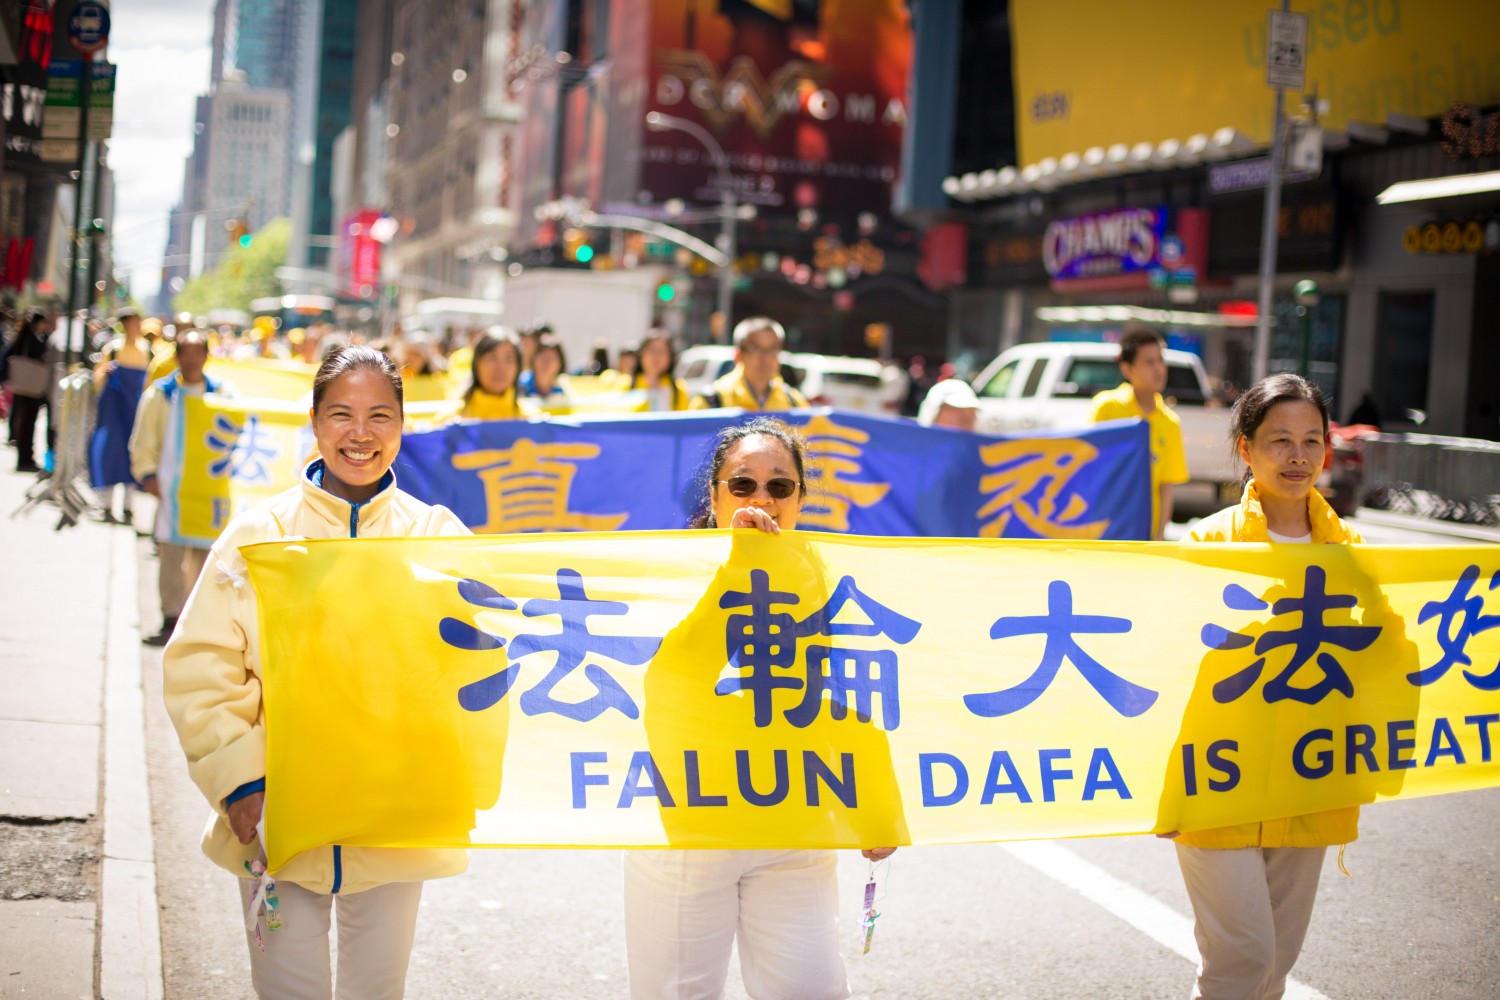 25 Jahre Falun Dafa: Riesige Parade in New York mit 10.000 Teilnehmern